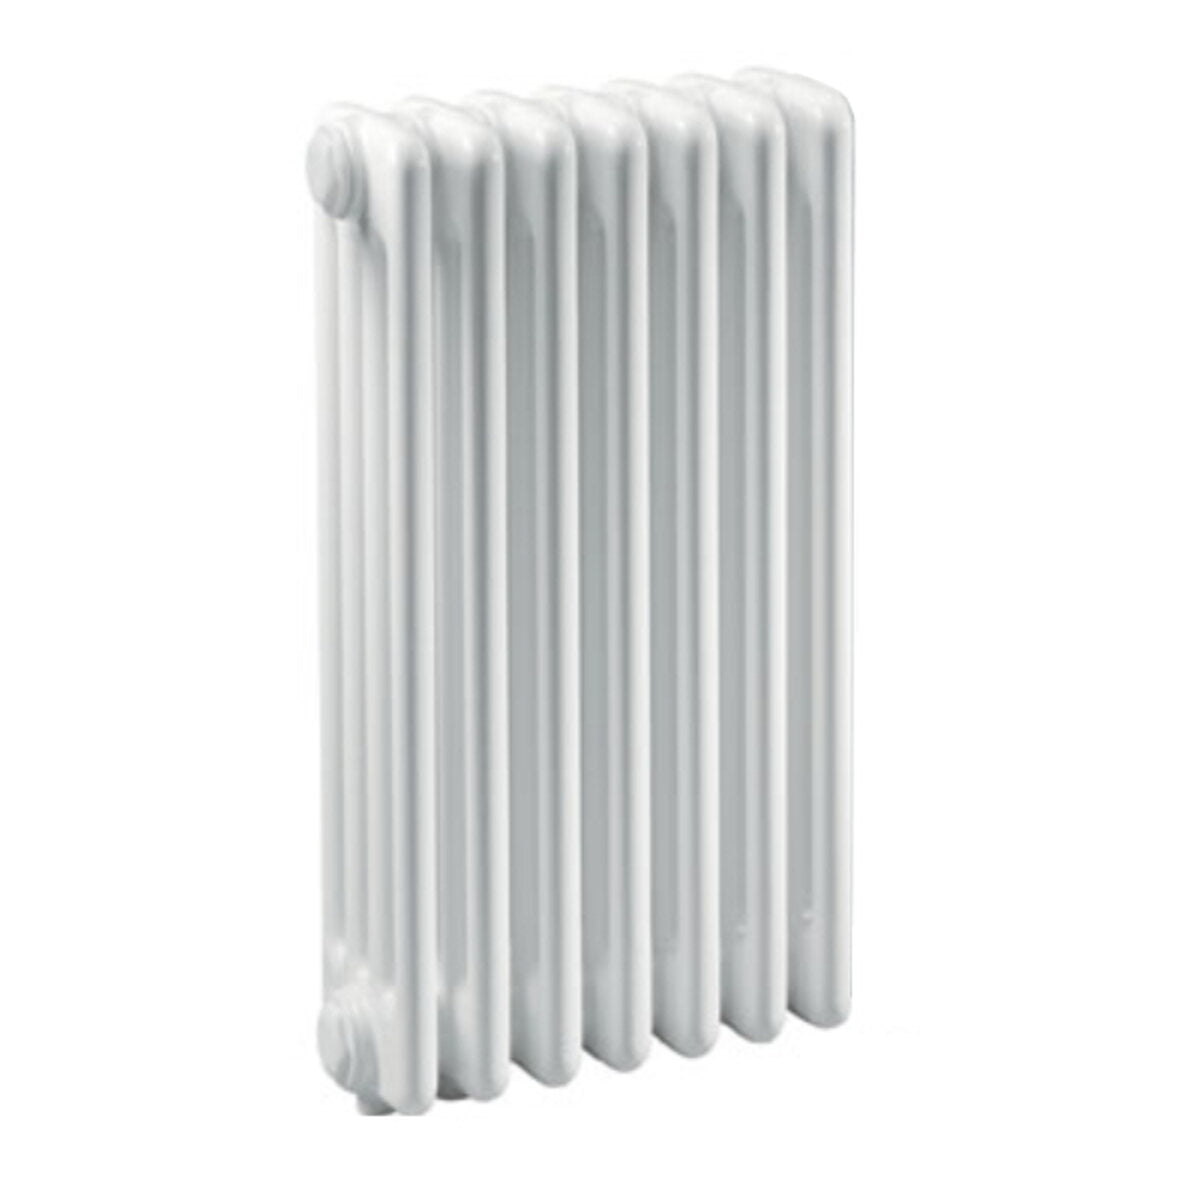 Ercos Comby steel column radiator 7 elements 3 columns center distance 1735 mm